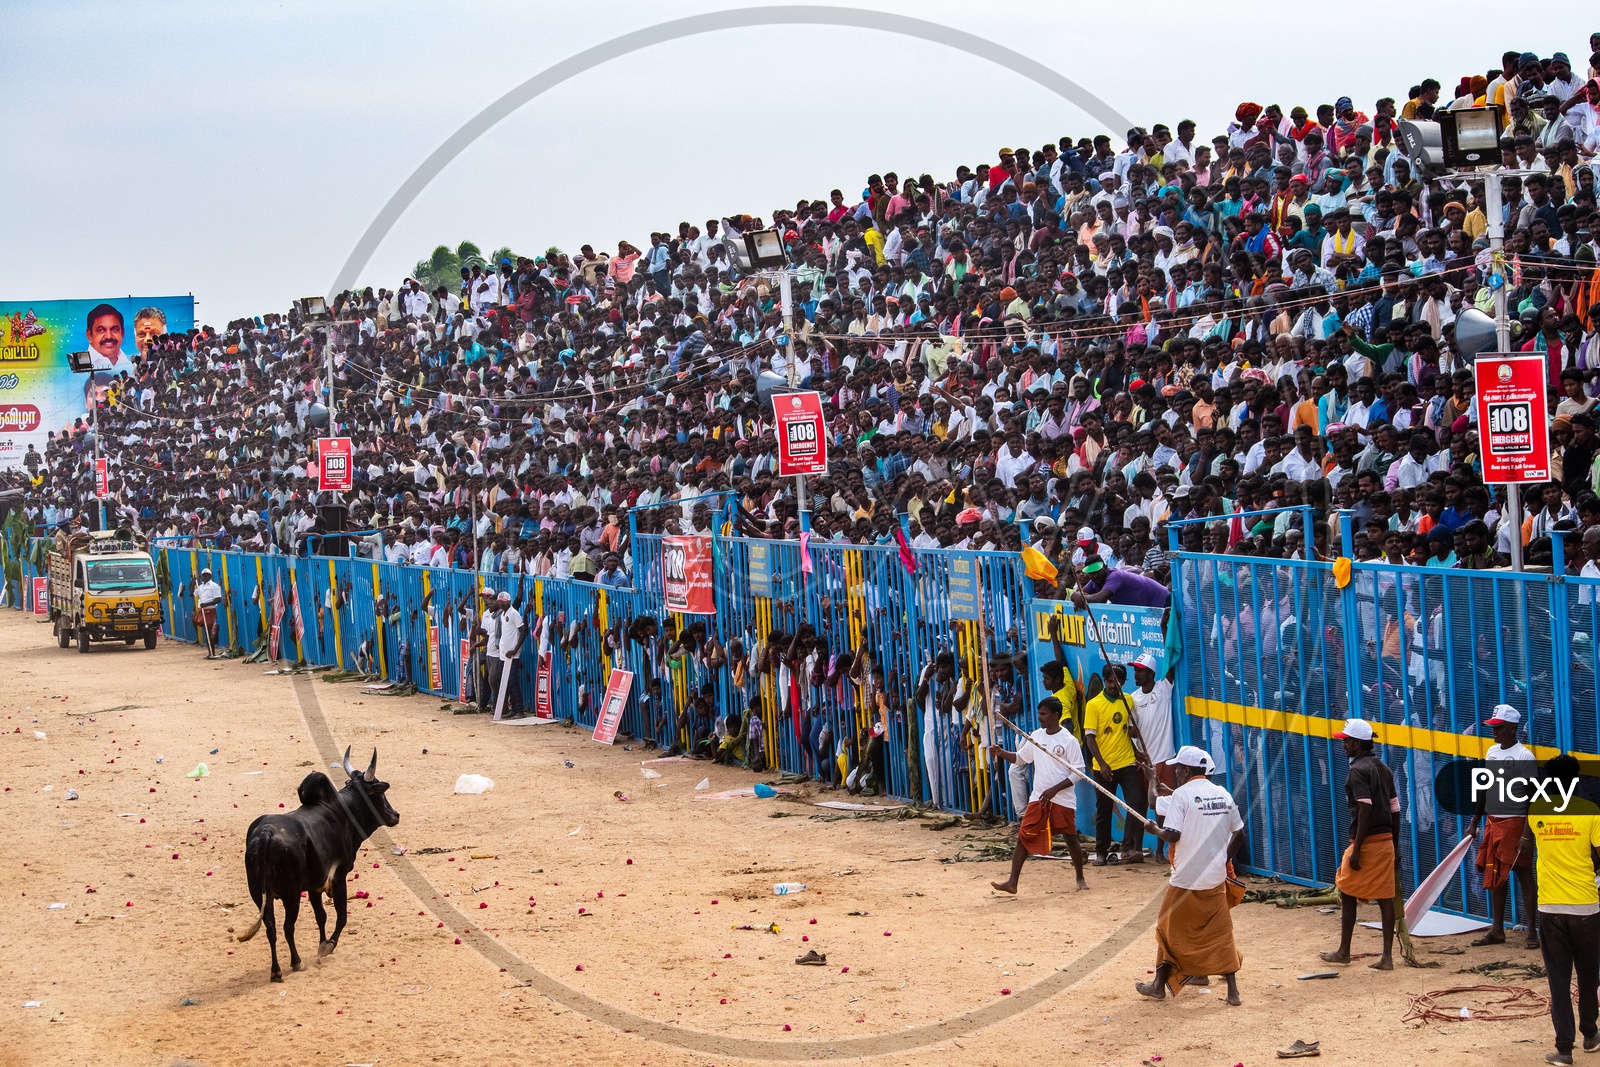 Berserk Bull Released Into  Crowd at Jallikattu In Tamilnadu